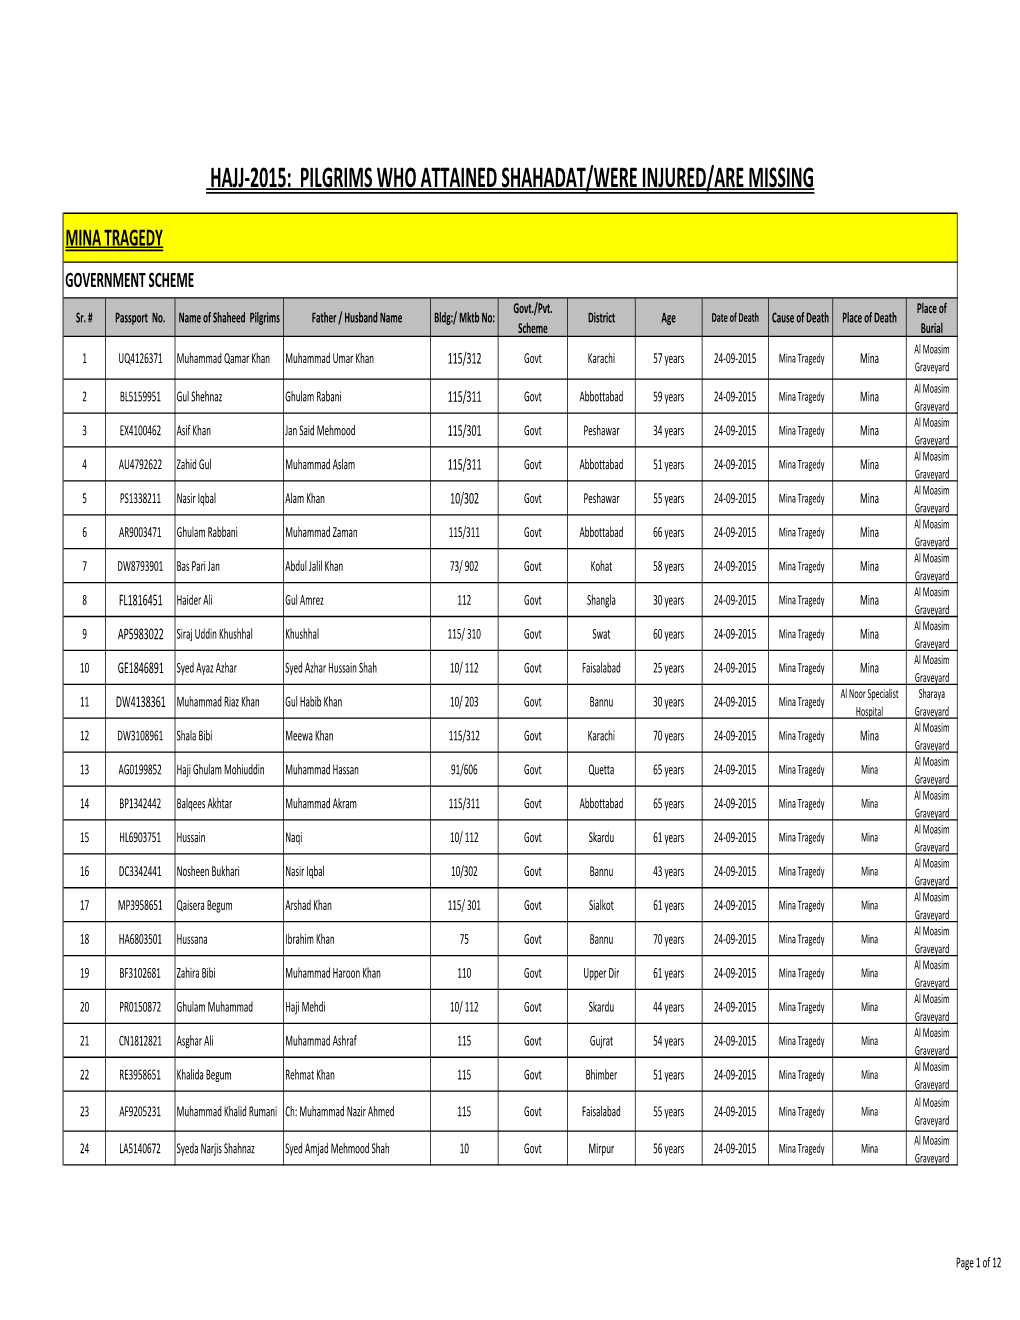 Lattest List for Deceased During Hajj 2015.Xlsx